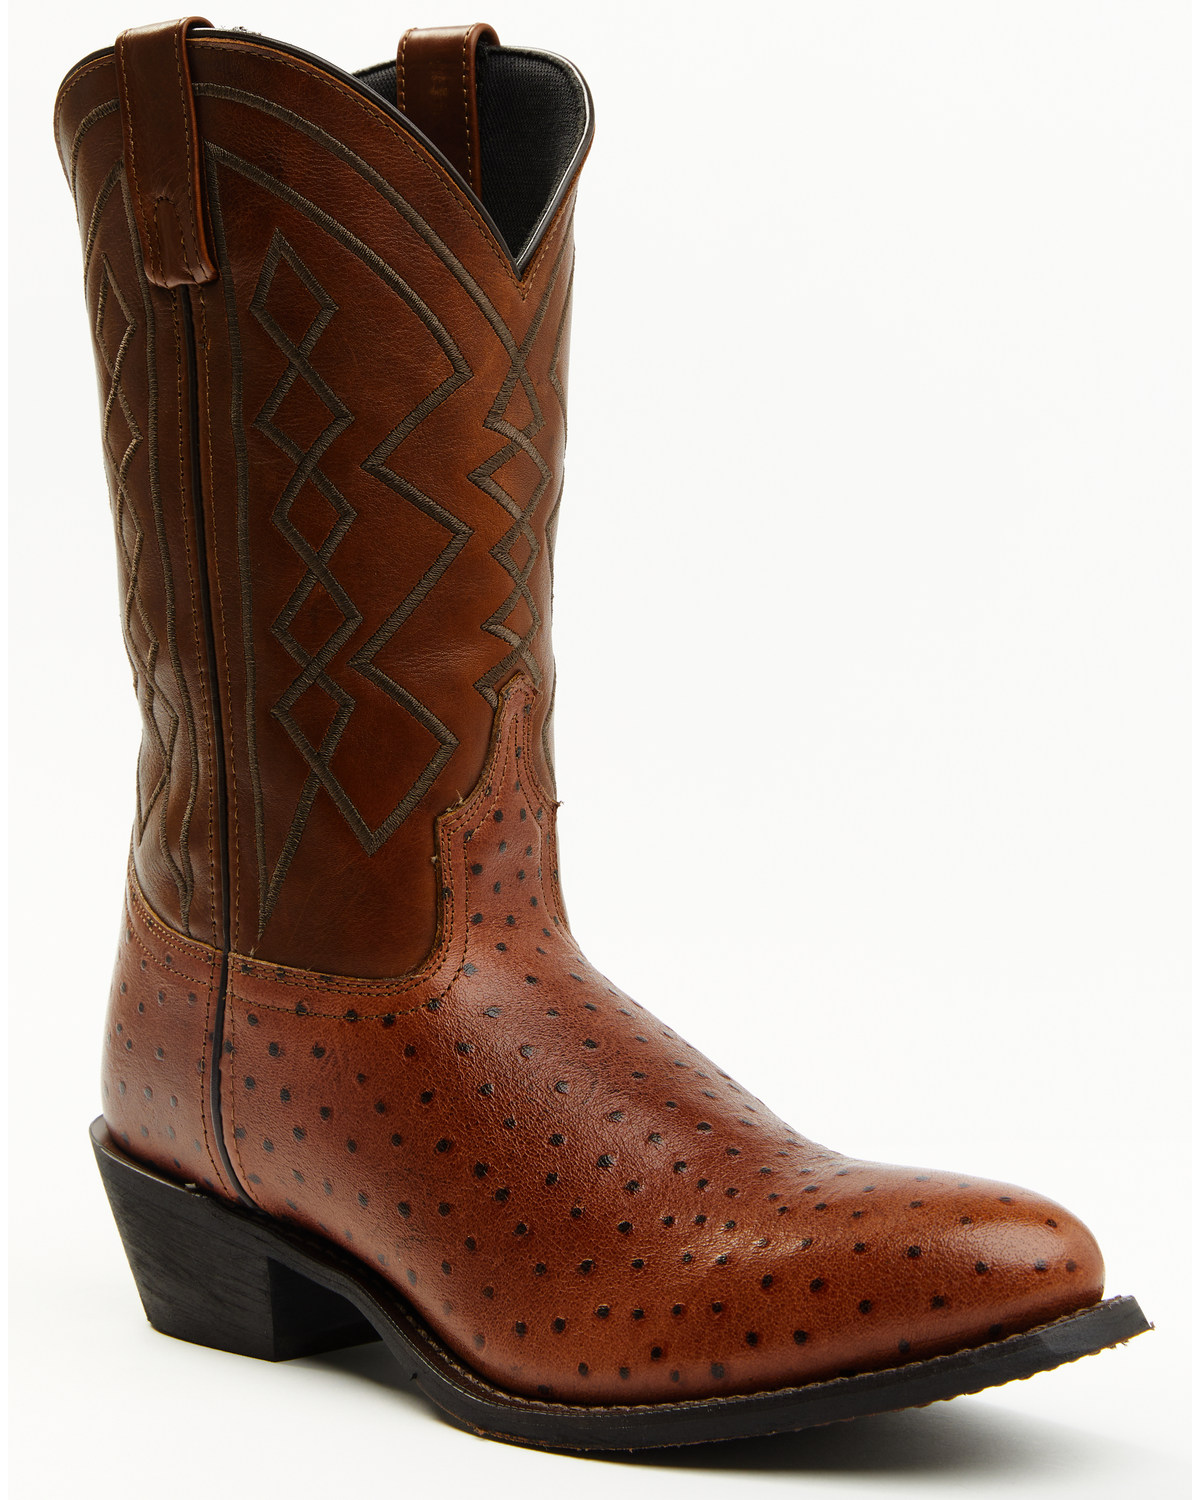 Laredo Men's Ostrich Print Western Boots - Medium Toe